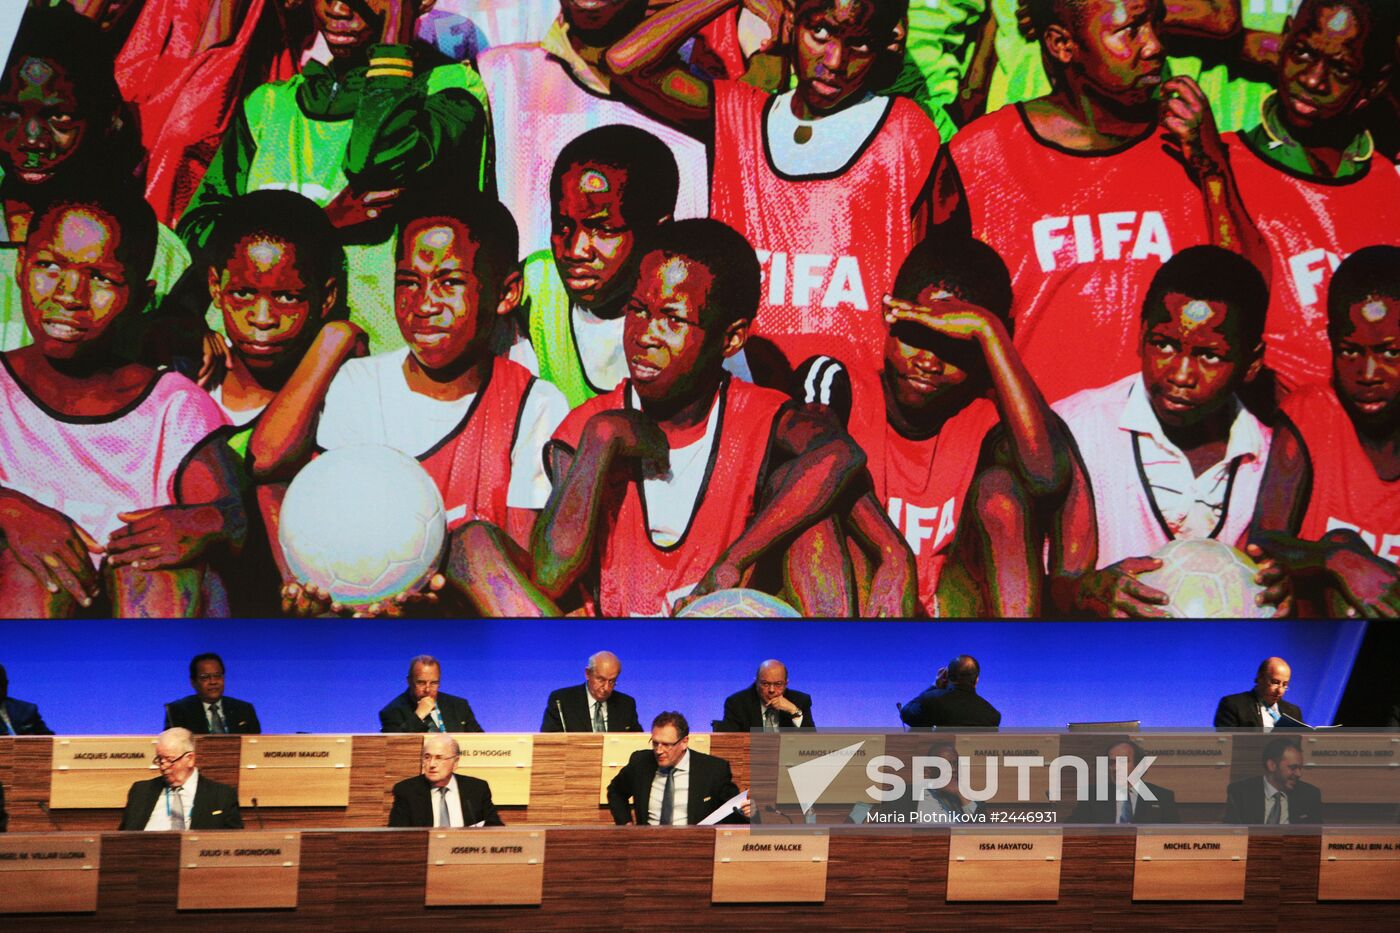 64th FIFA Congress